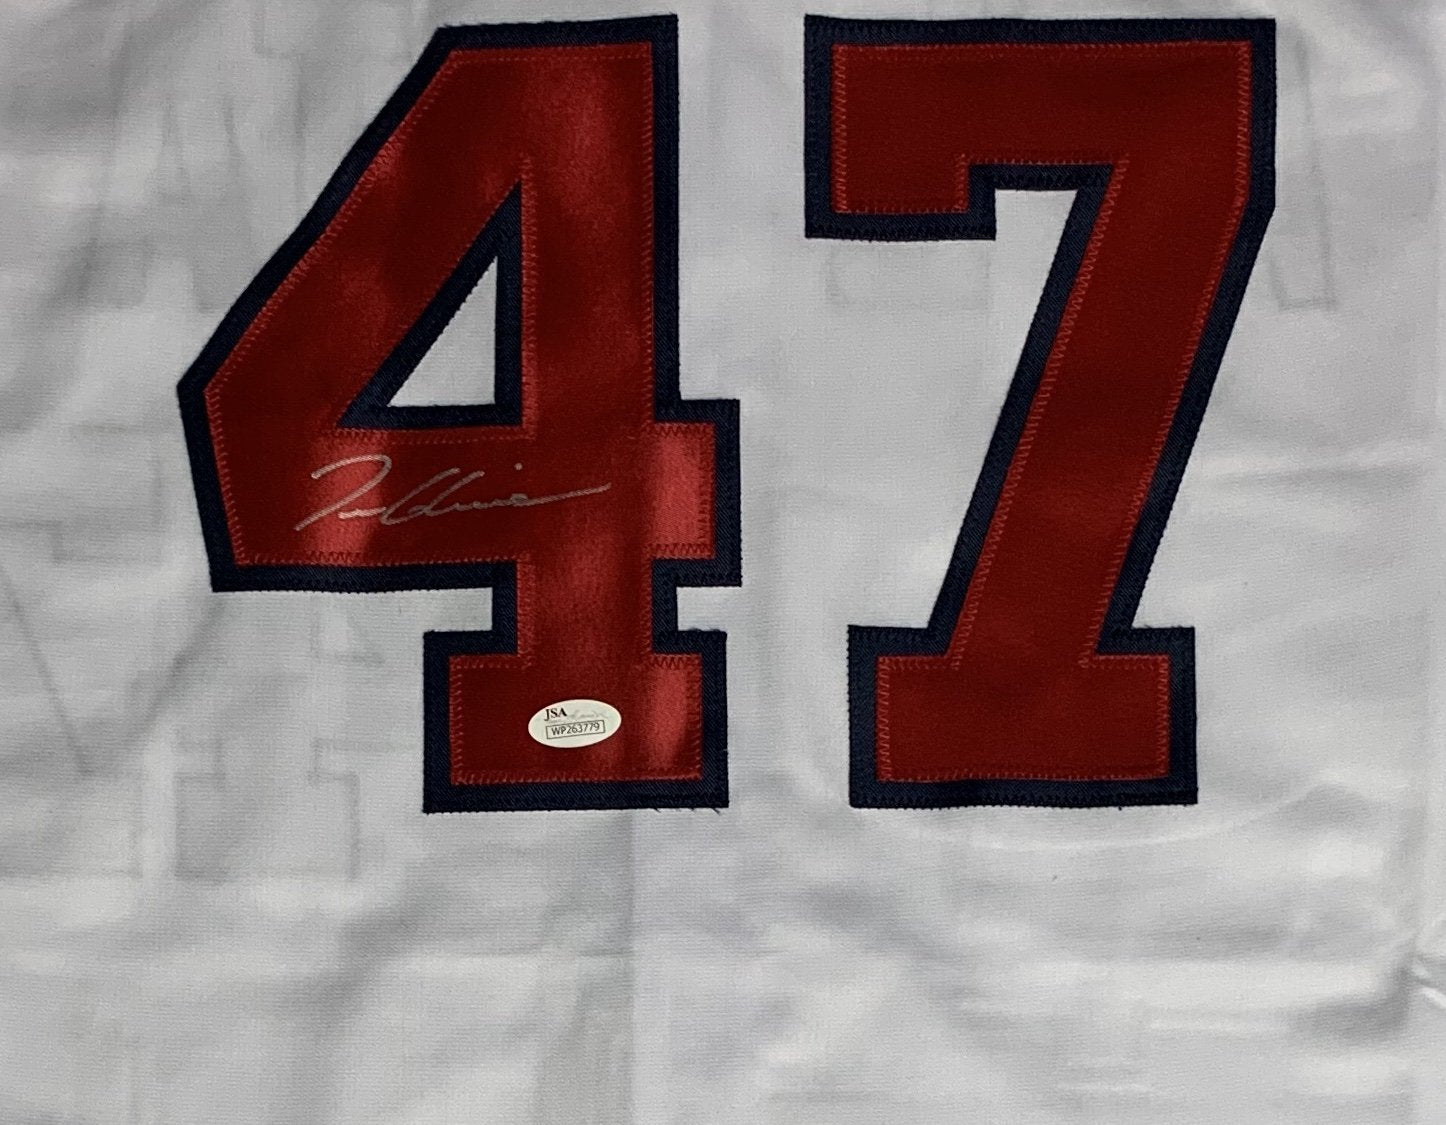 Sold at Auction: Atlanta Braves Tom Glavine Signed Baseball Jersey